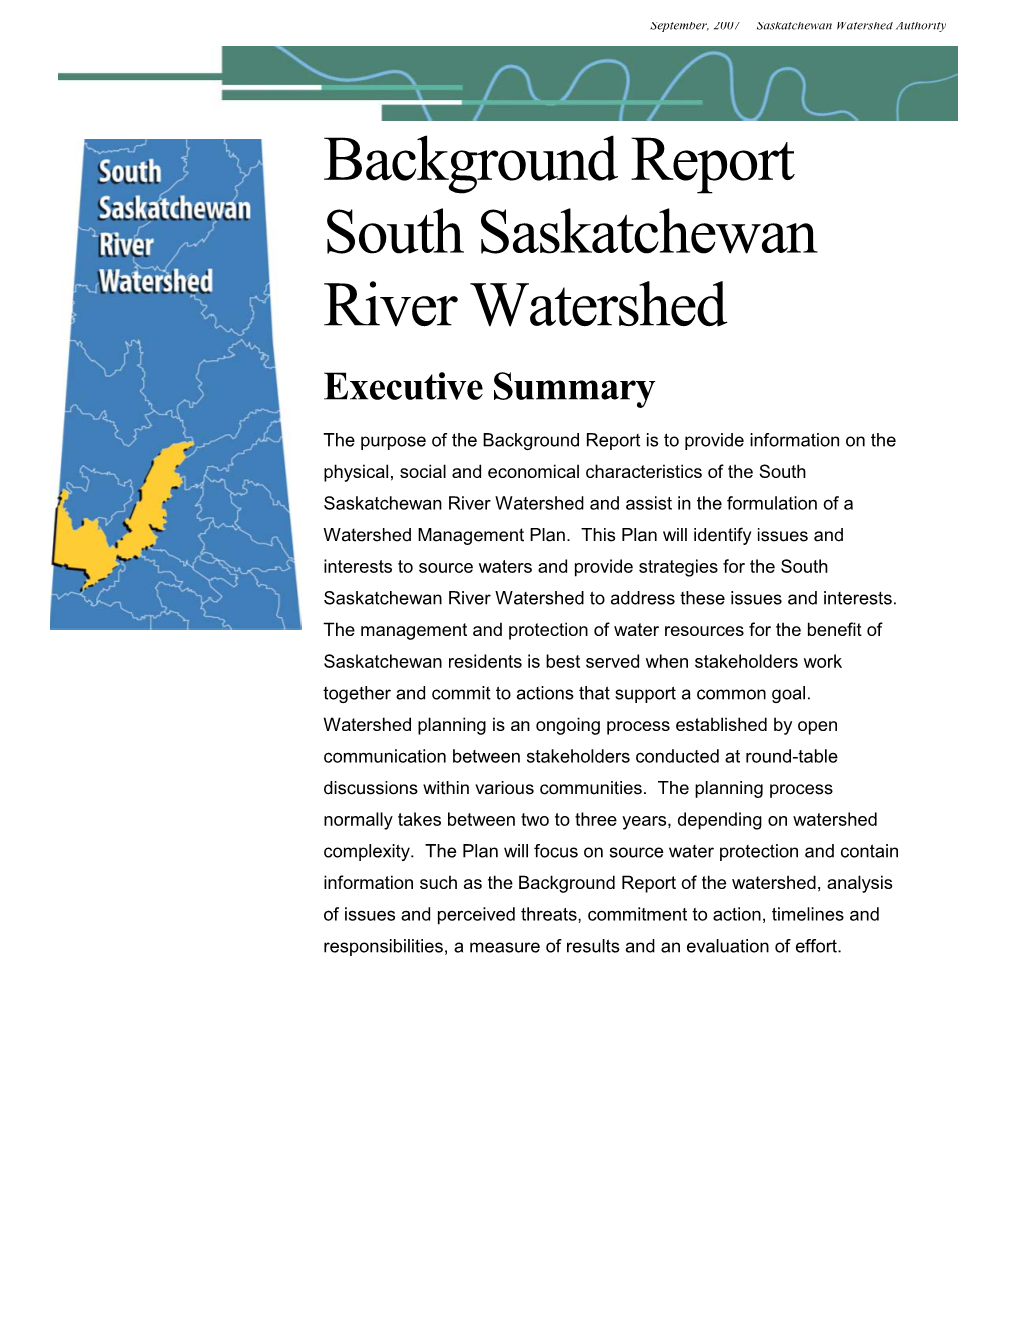 Background Report South Saskatchewan River Watershed